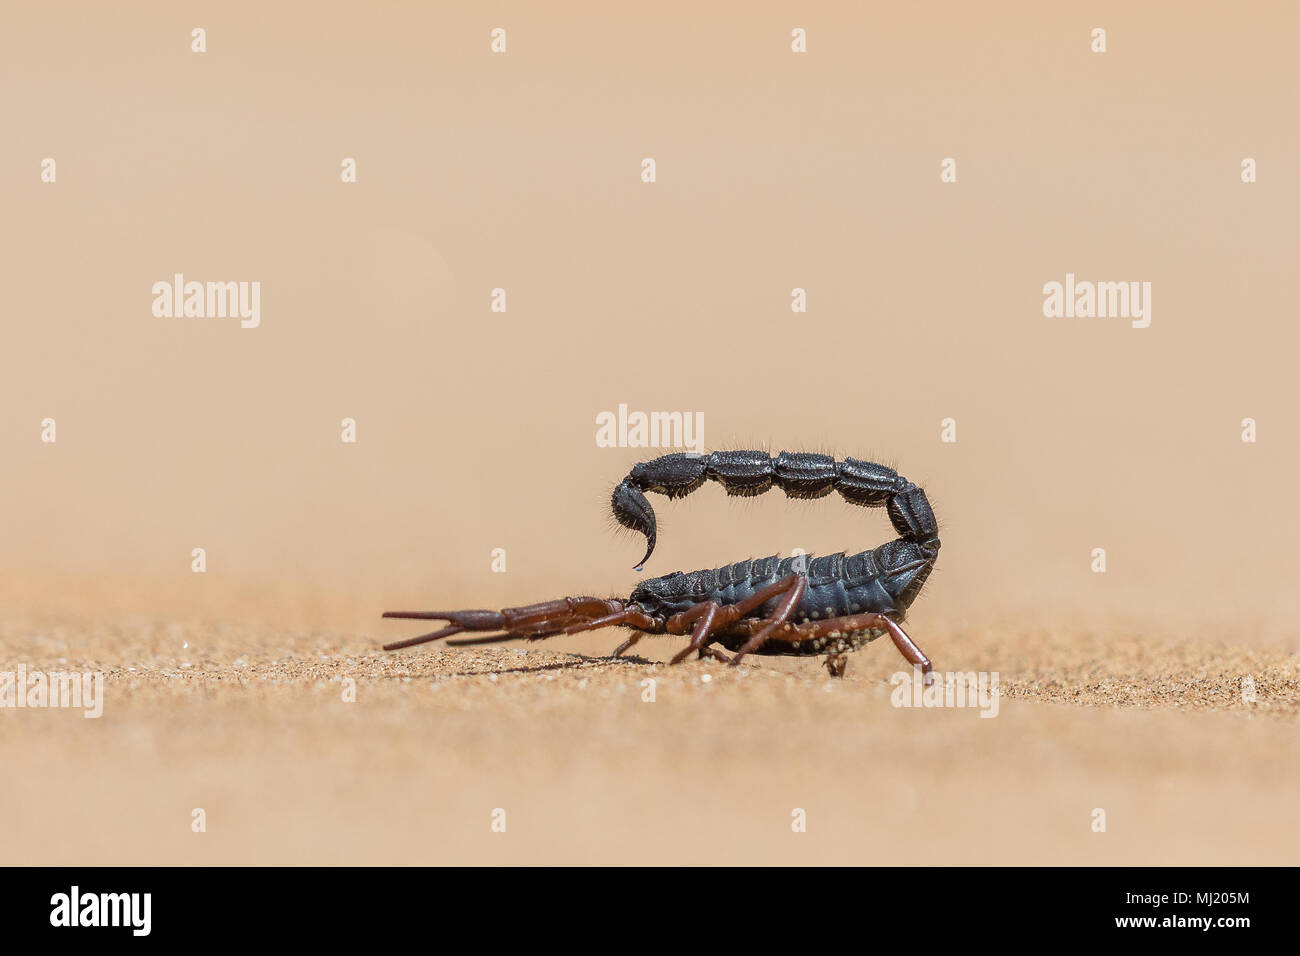 Transvaal thick-tailed scorpion (Parabuthus transvaalicus) in Sand Desert, Namib-Naukluft Park, Namibia Stock Photo